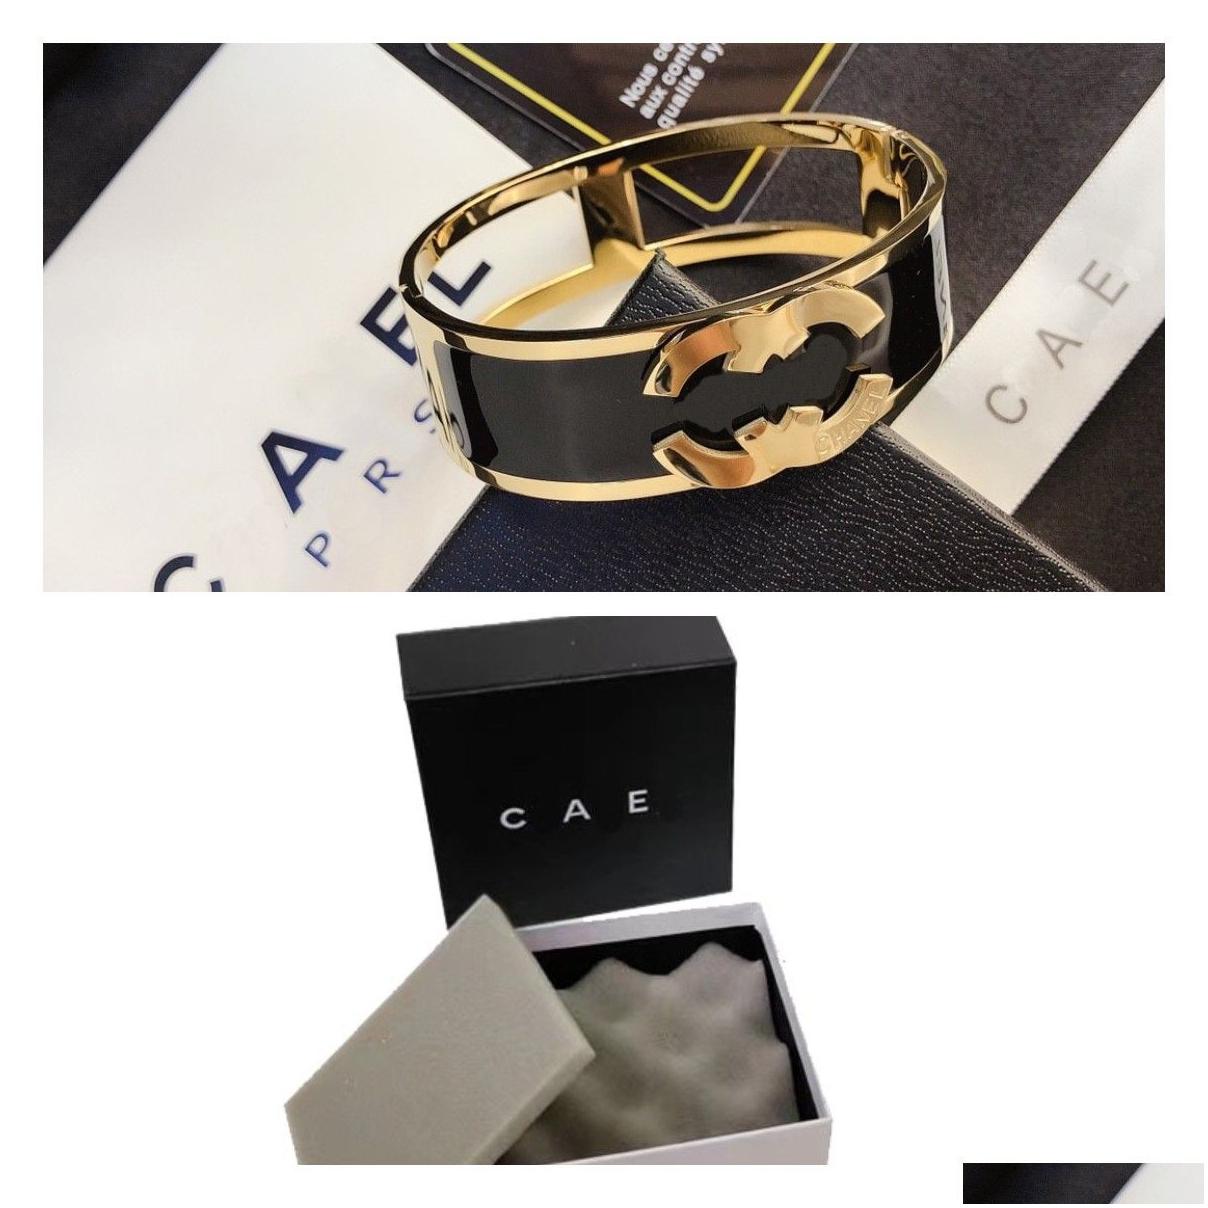  brand gold bangle famous designer bracelet fashion circle couple love bracelet luxury jewelry party birthday accessories gift box classic